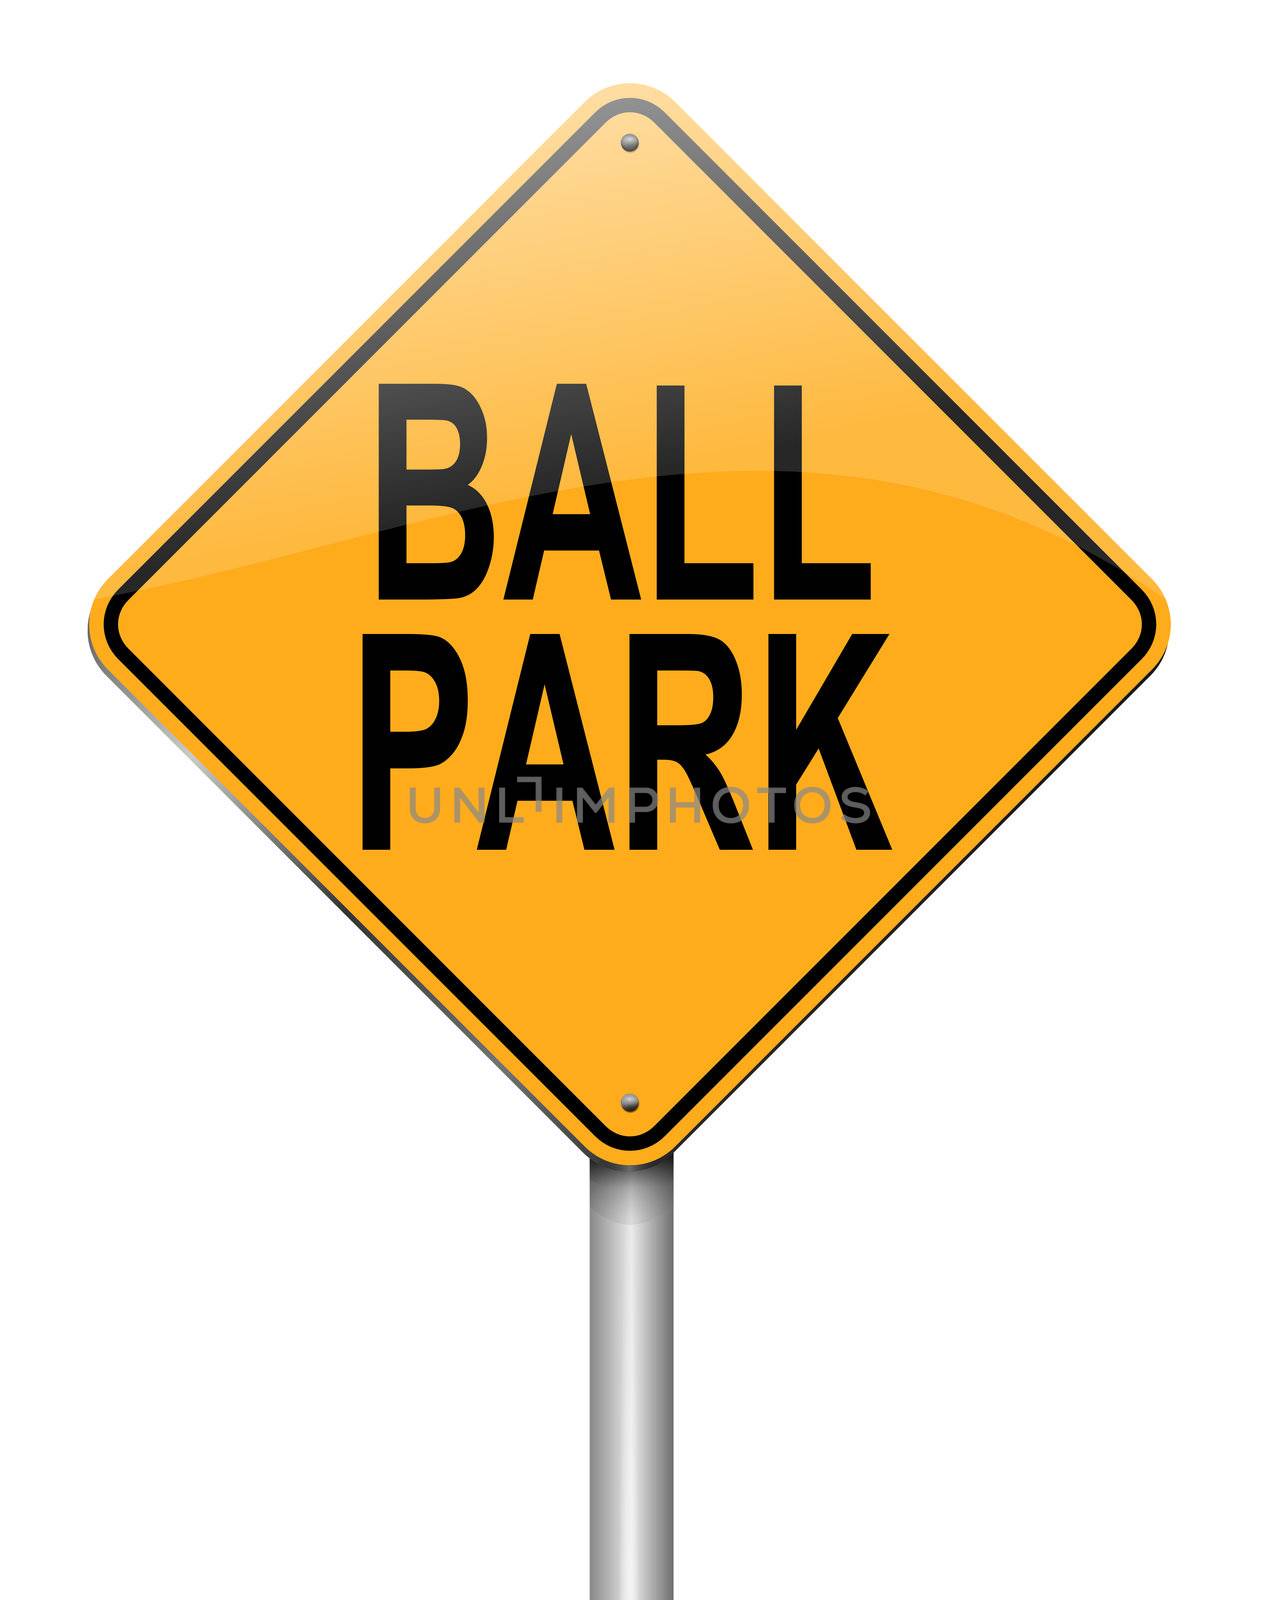 Ball park concept. by 72soul